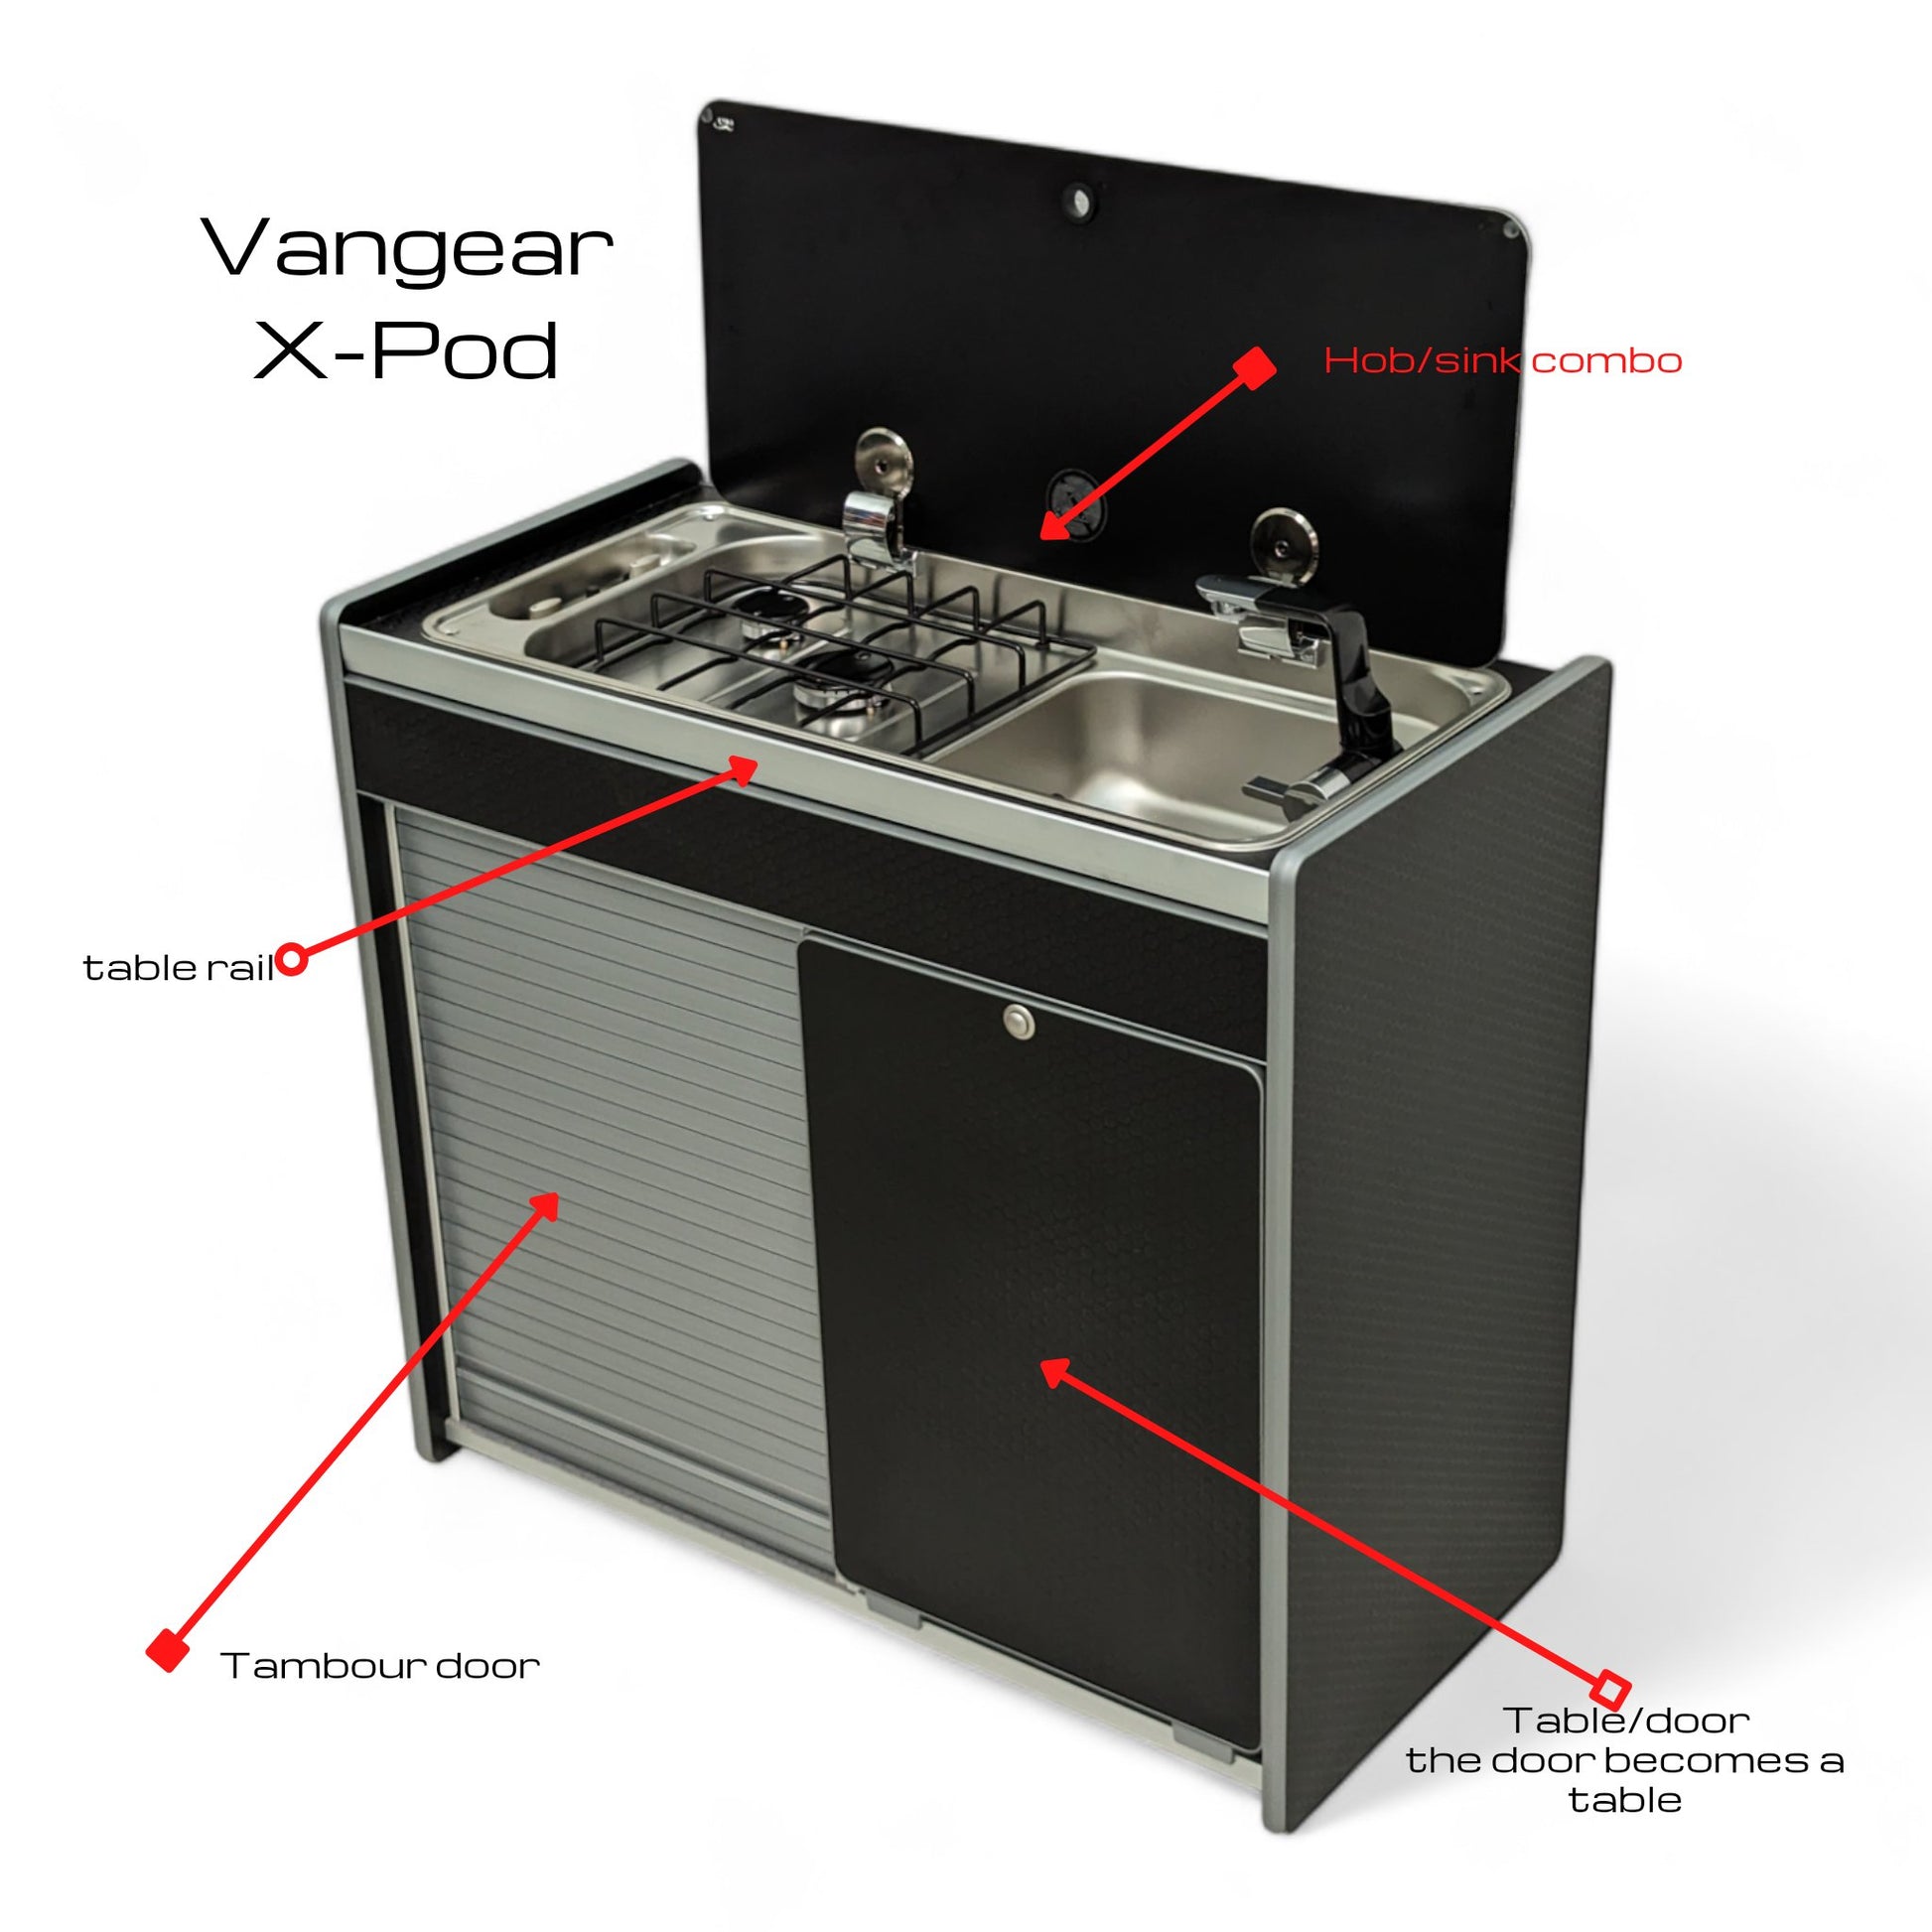 Vangear X-Pod (Gen2) Campervan kitchen (Black) - Vangear UK